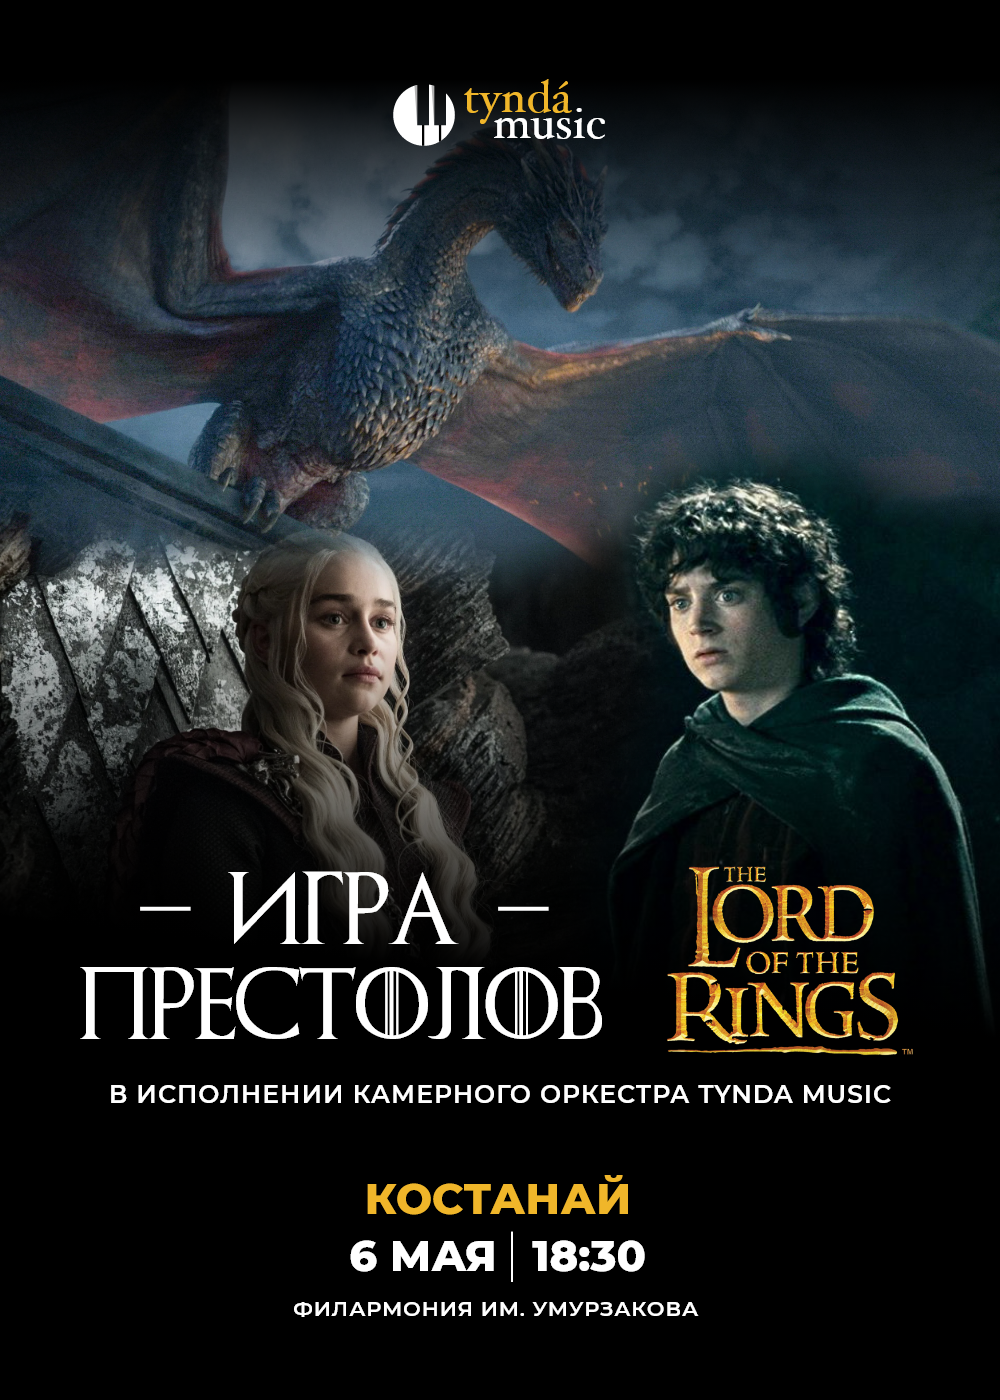 Game of Thrones in Kostanay. Tynda Music